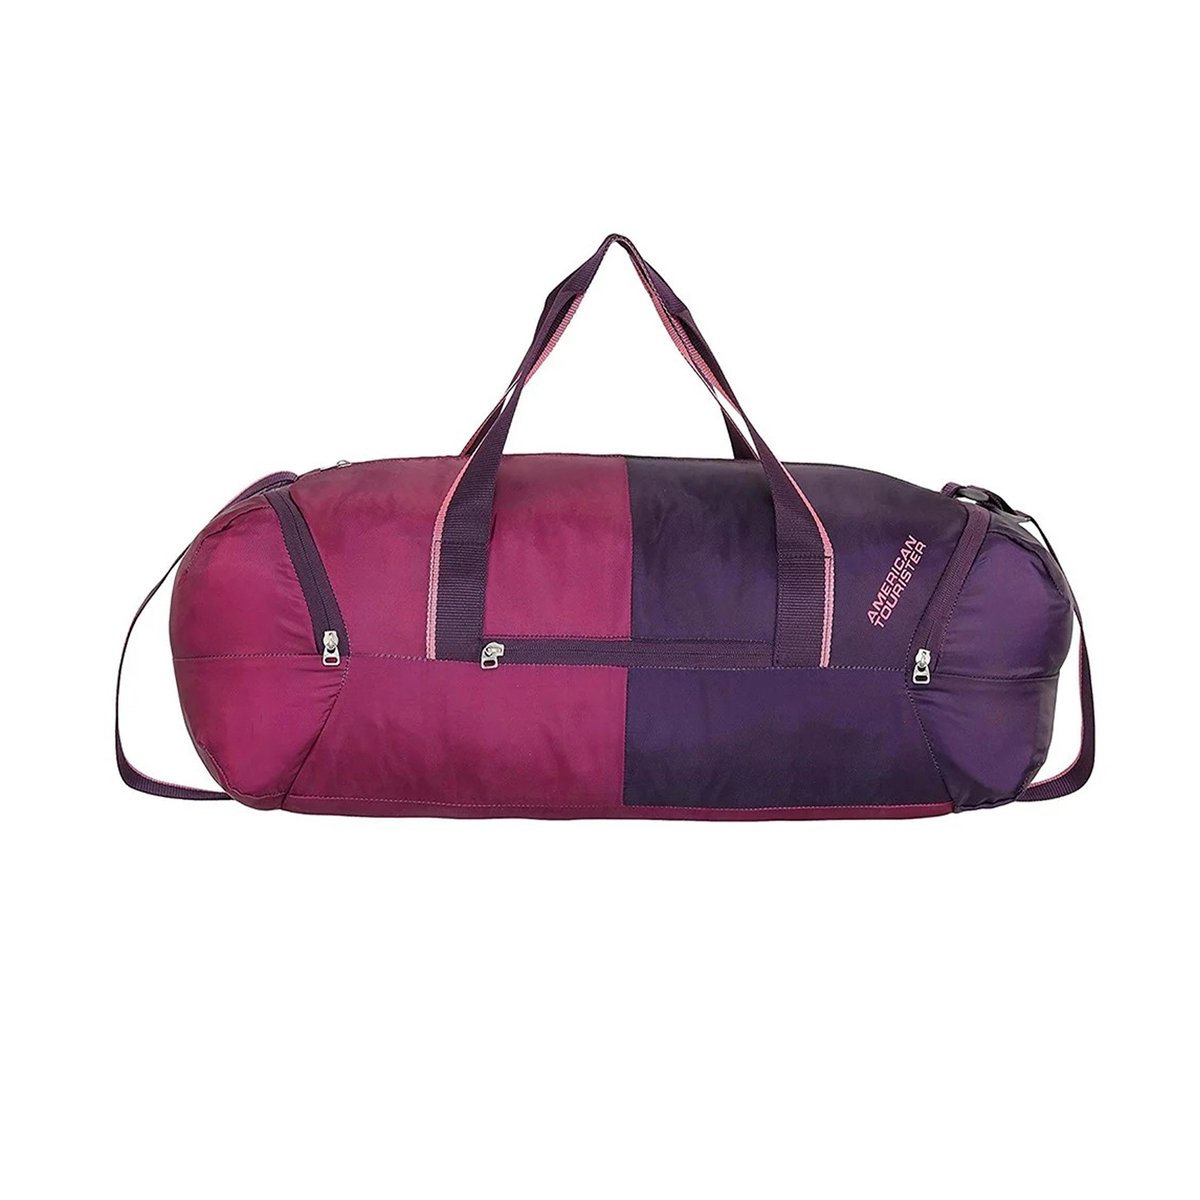 American Tourister Flair Duffle Bag, 53 cm, Purple